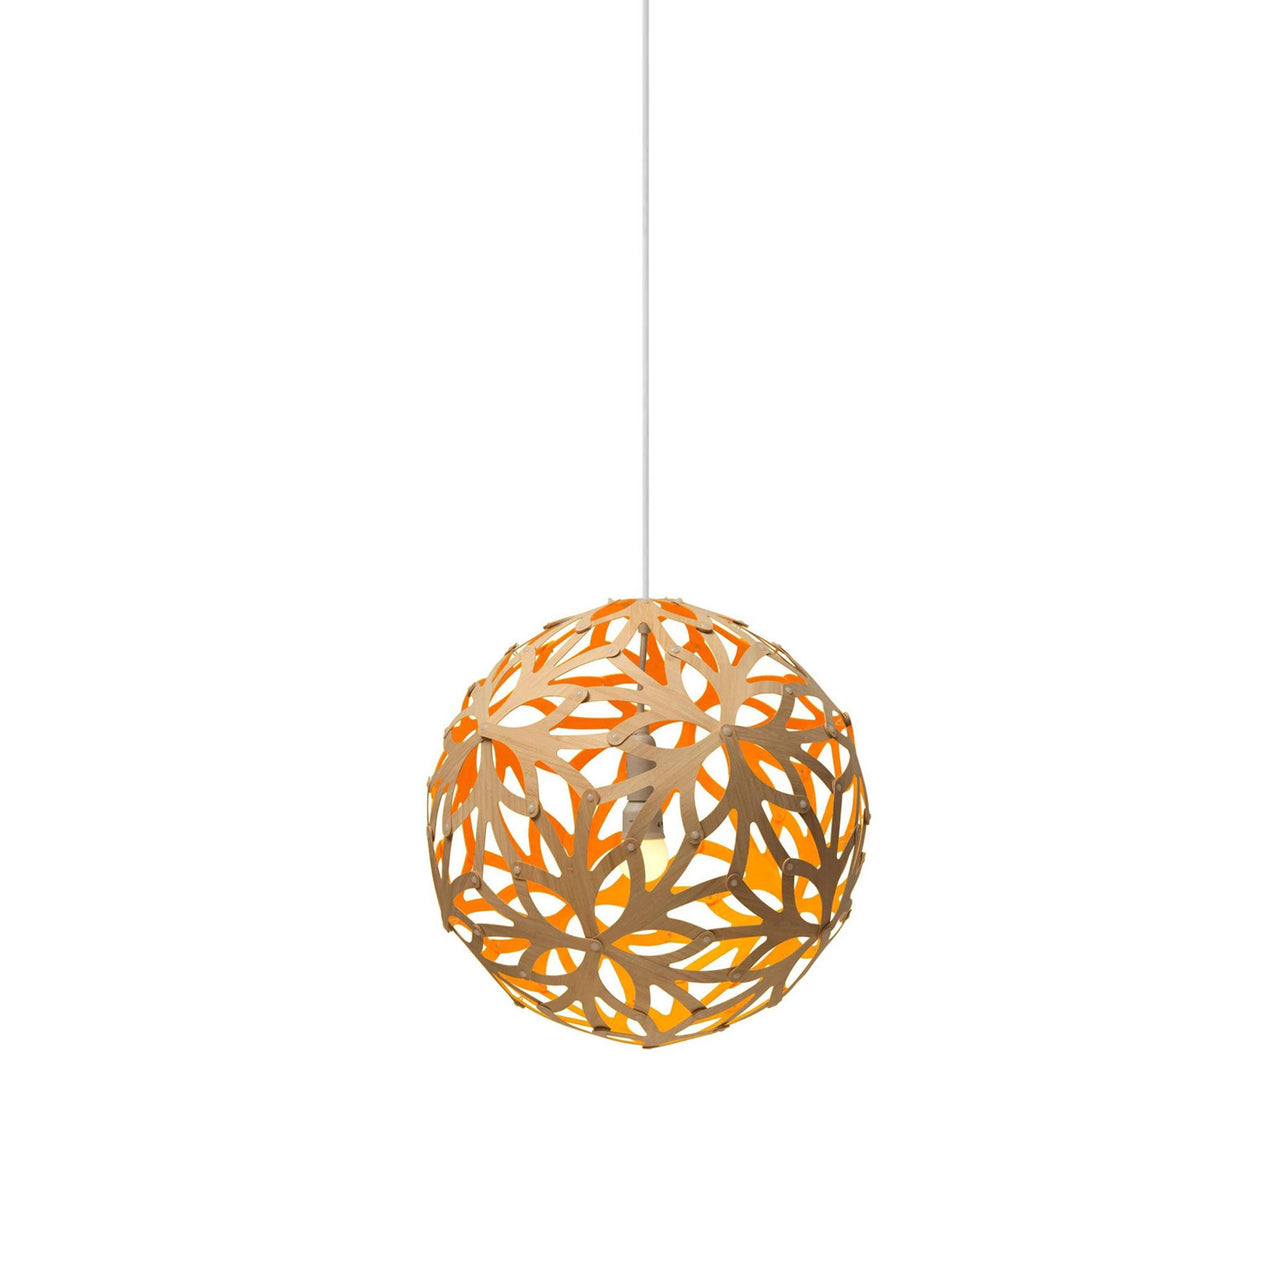 Floral Pendant Light: Extra Small + Bamboo + Orange + White